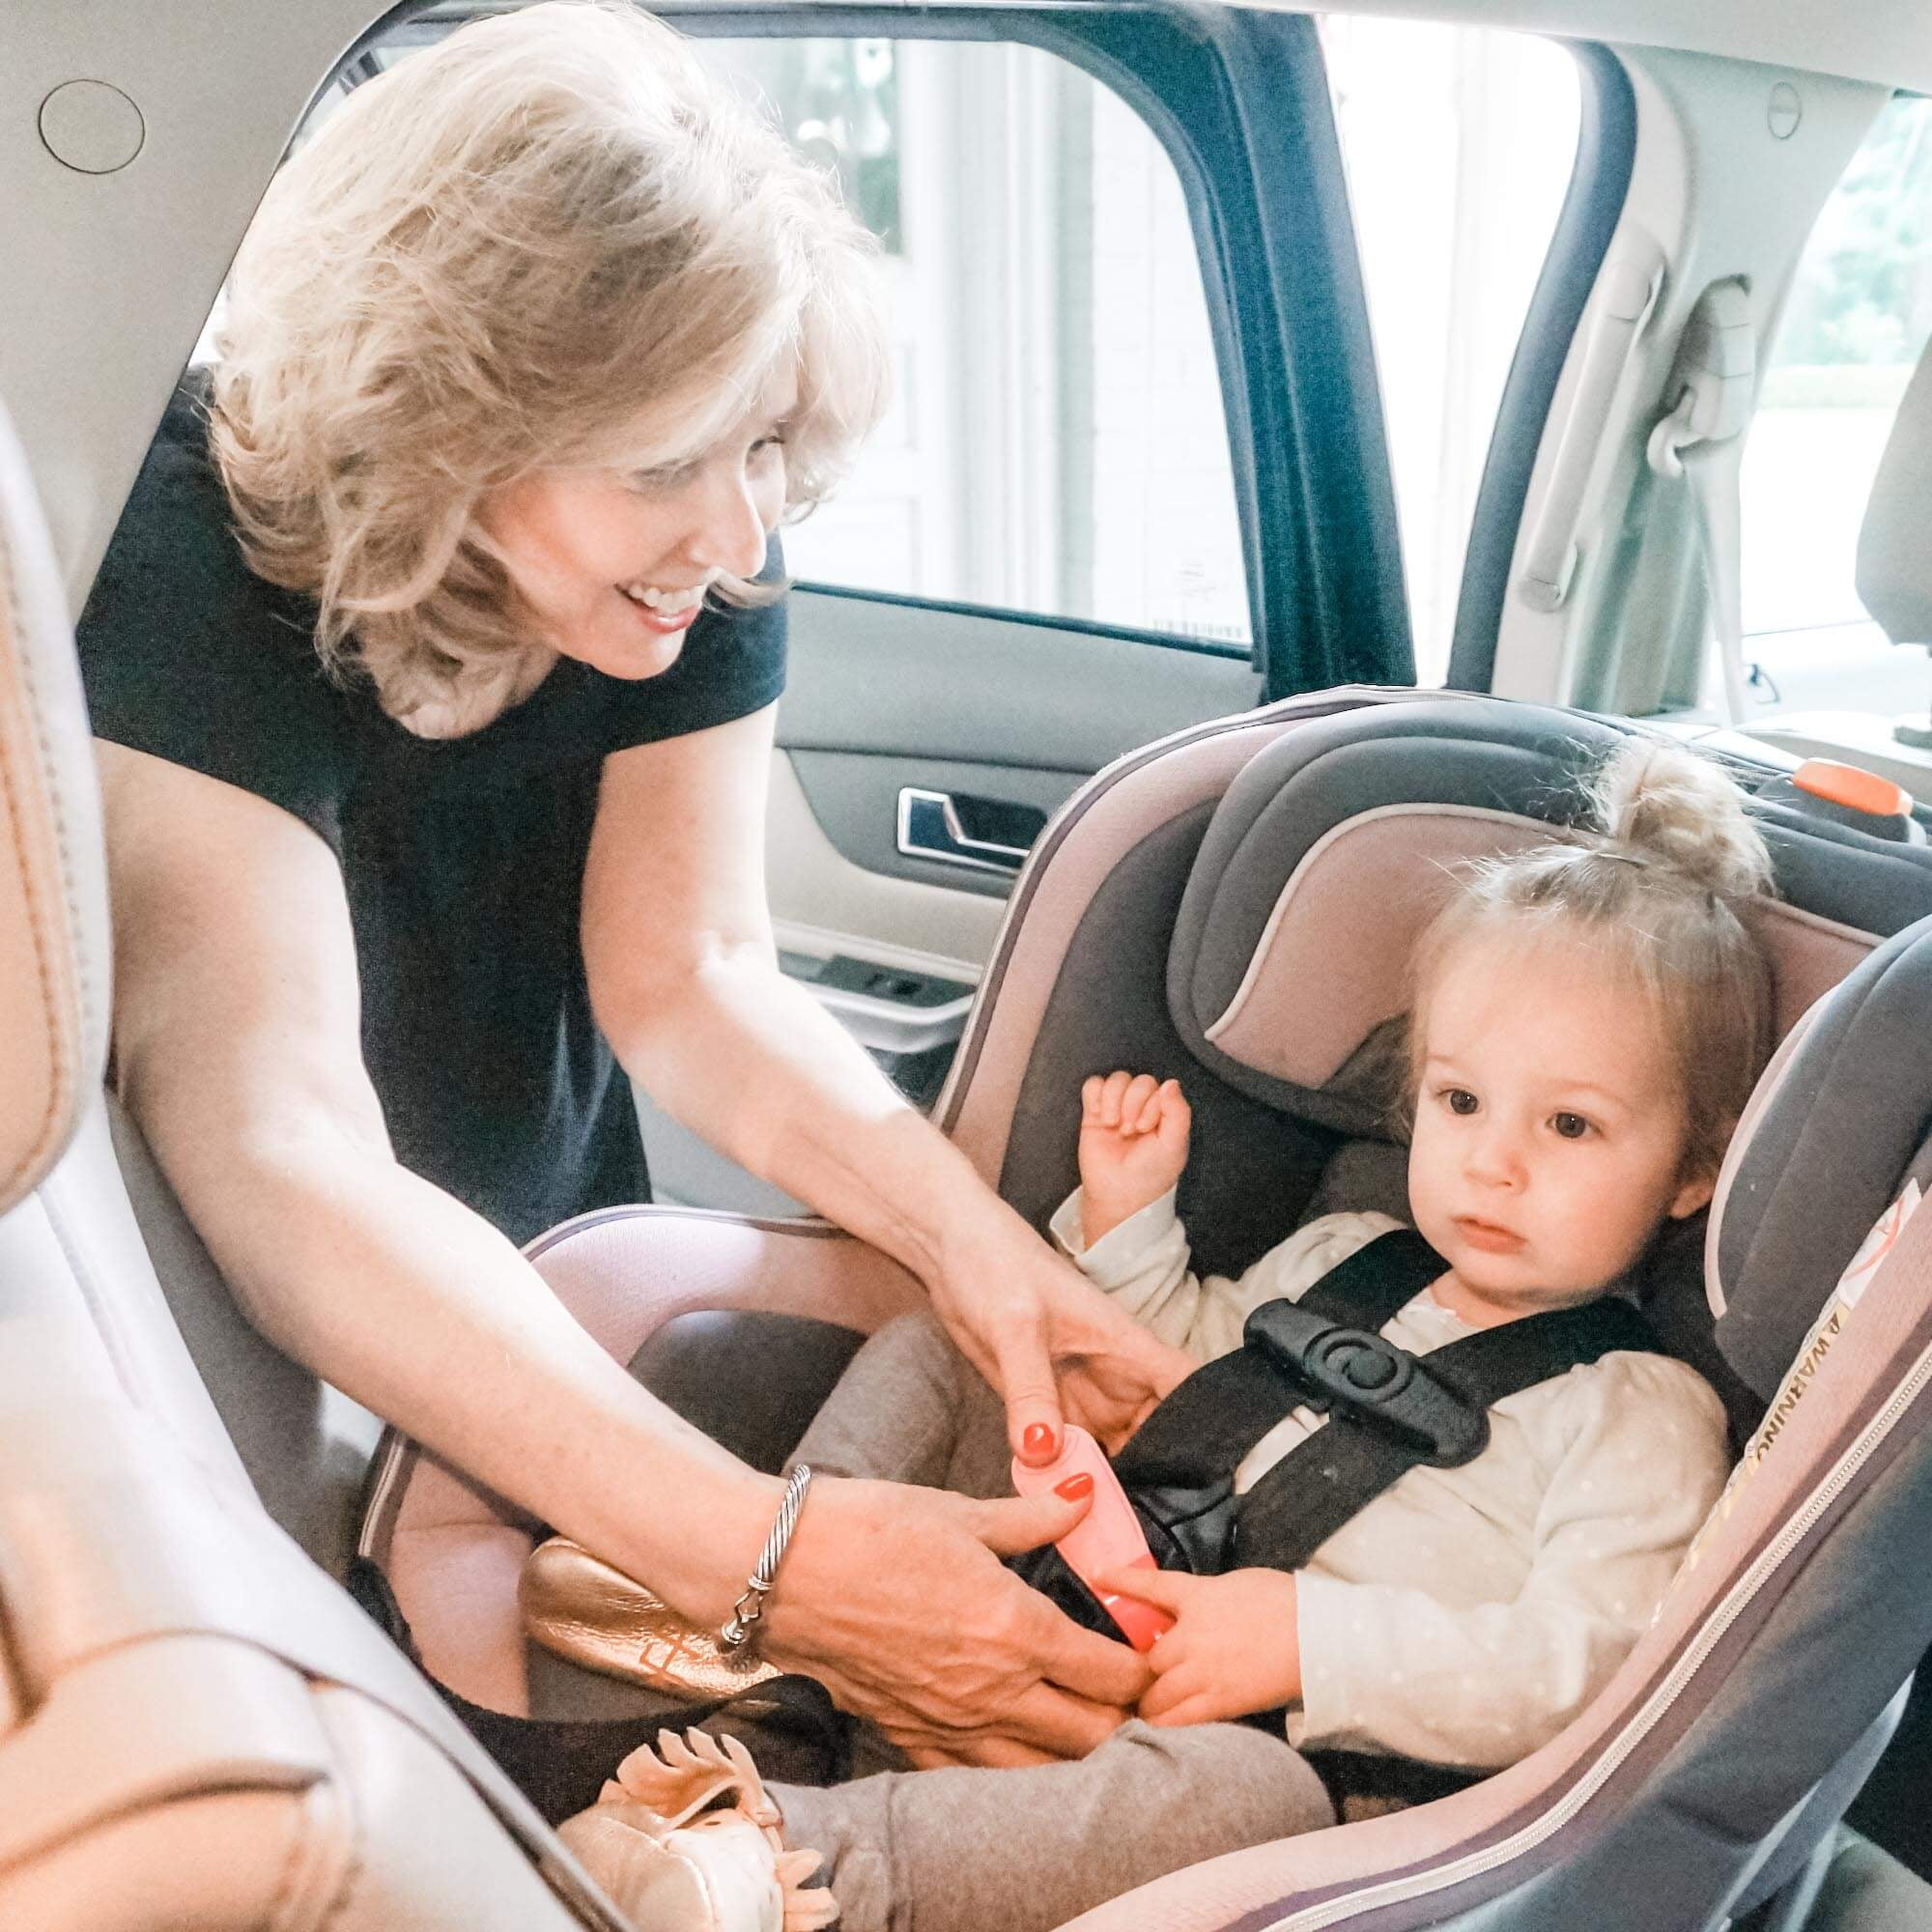 Premium Easy Unbuckle Release WeThinkeer Child Car Seat Belt Unbuckler B J6G8 